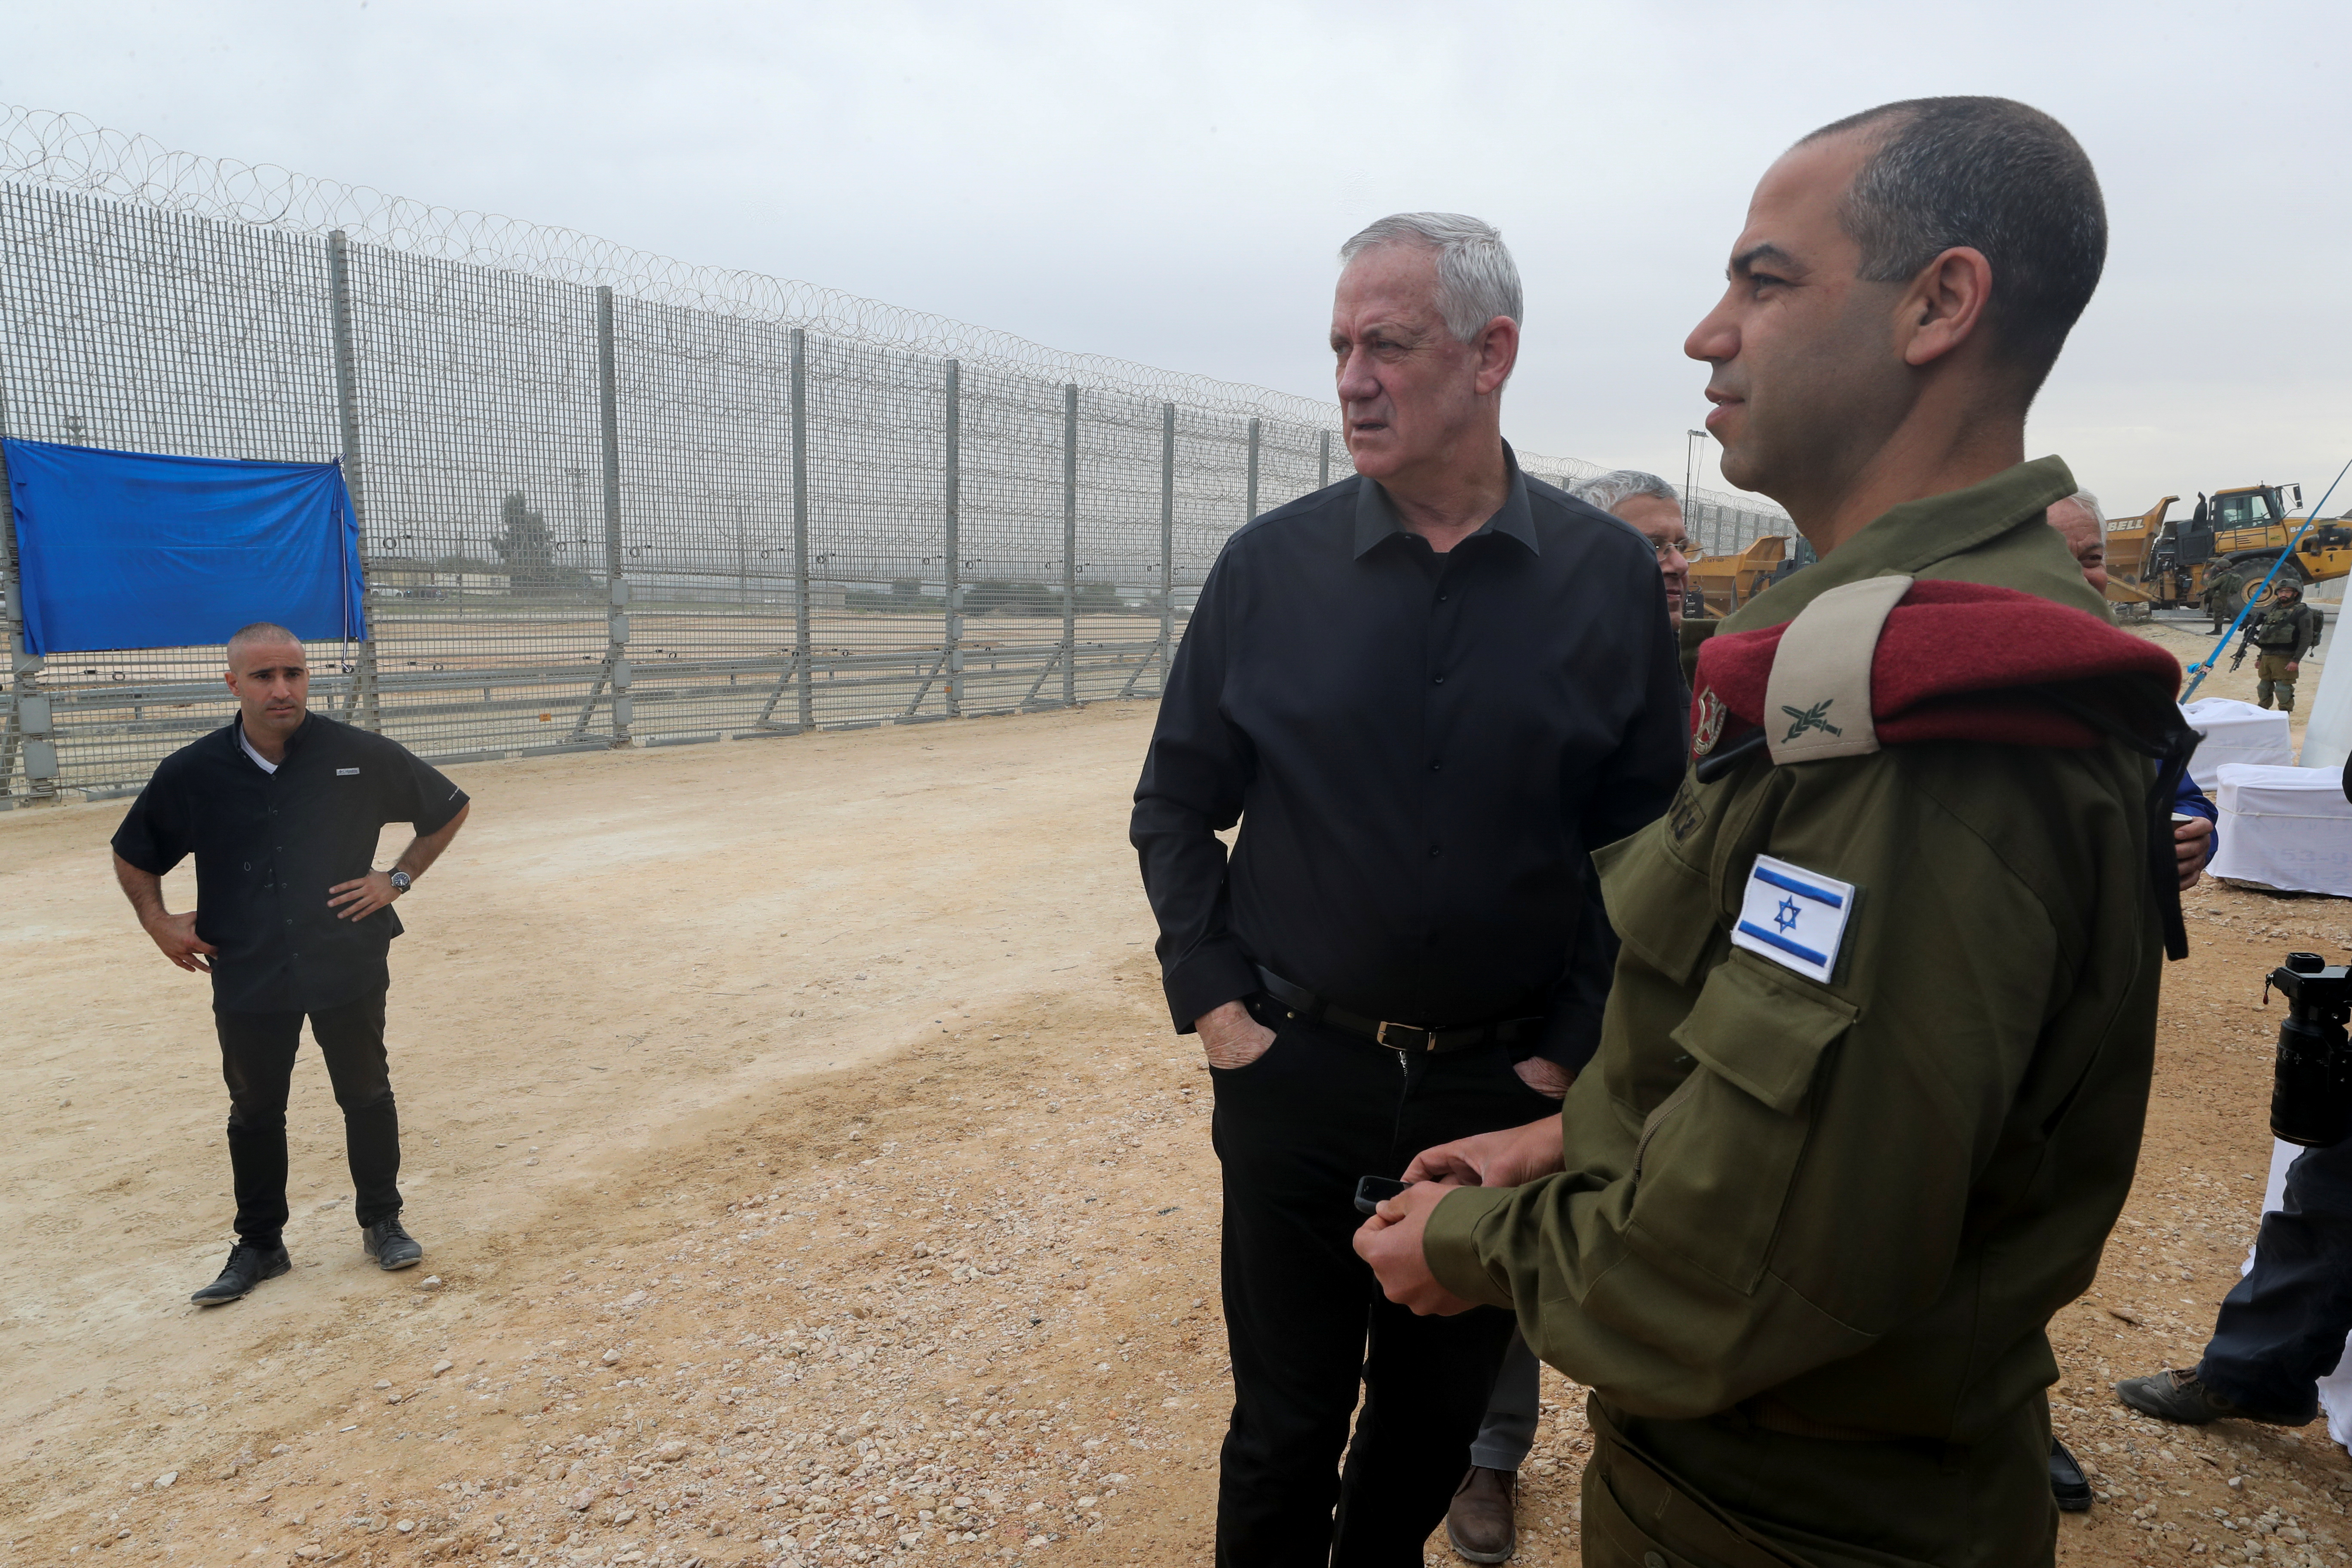 Israel reveals underground barrier along the Gaza Strip border